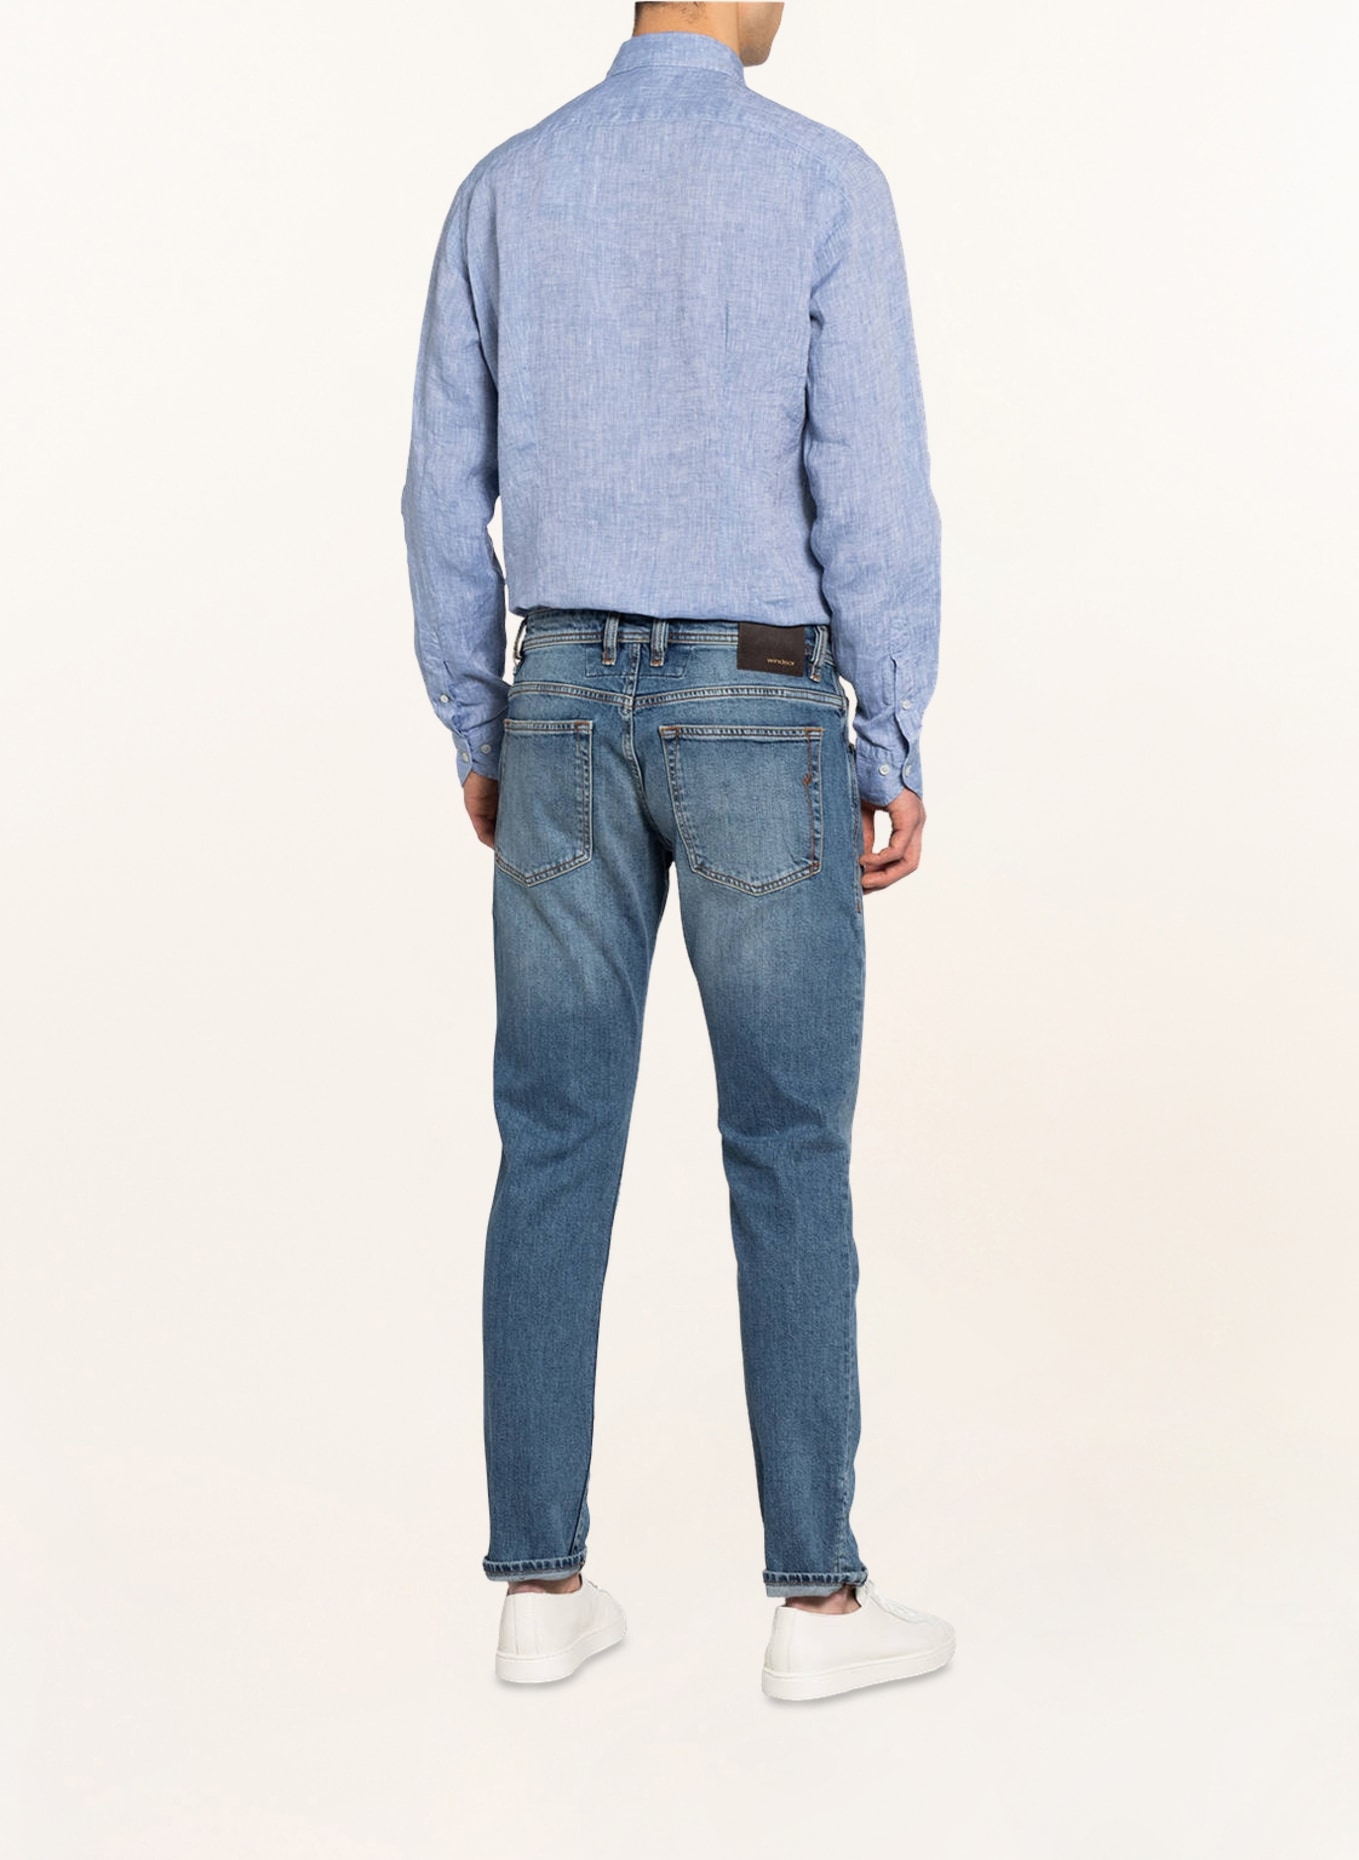 windsor. Jeans RUFFO Slim Fit, Farbe: 434 BRIGHT BLUE 434 (Bild 2)